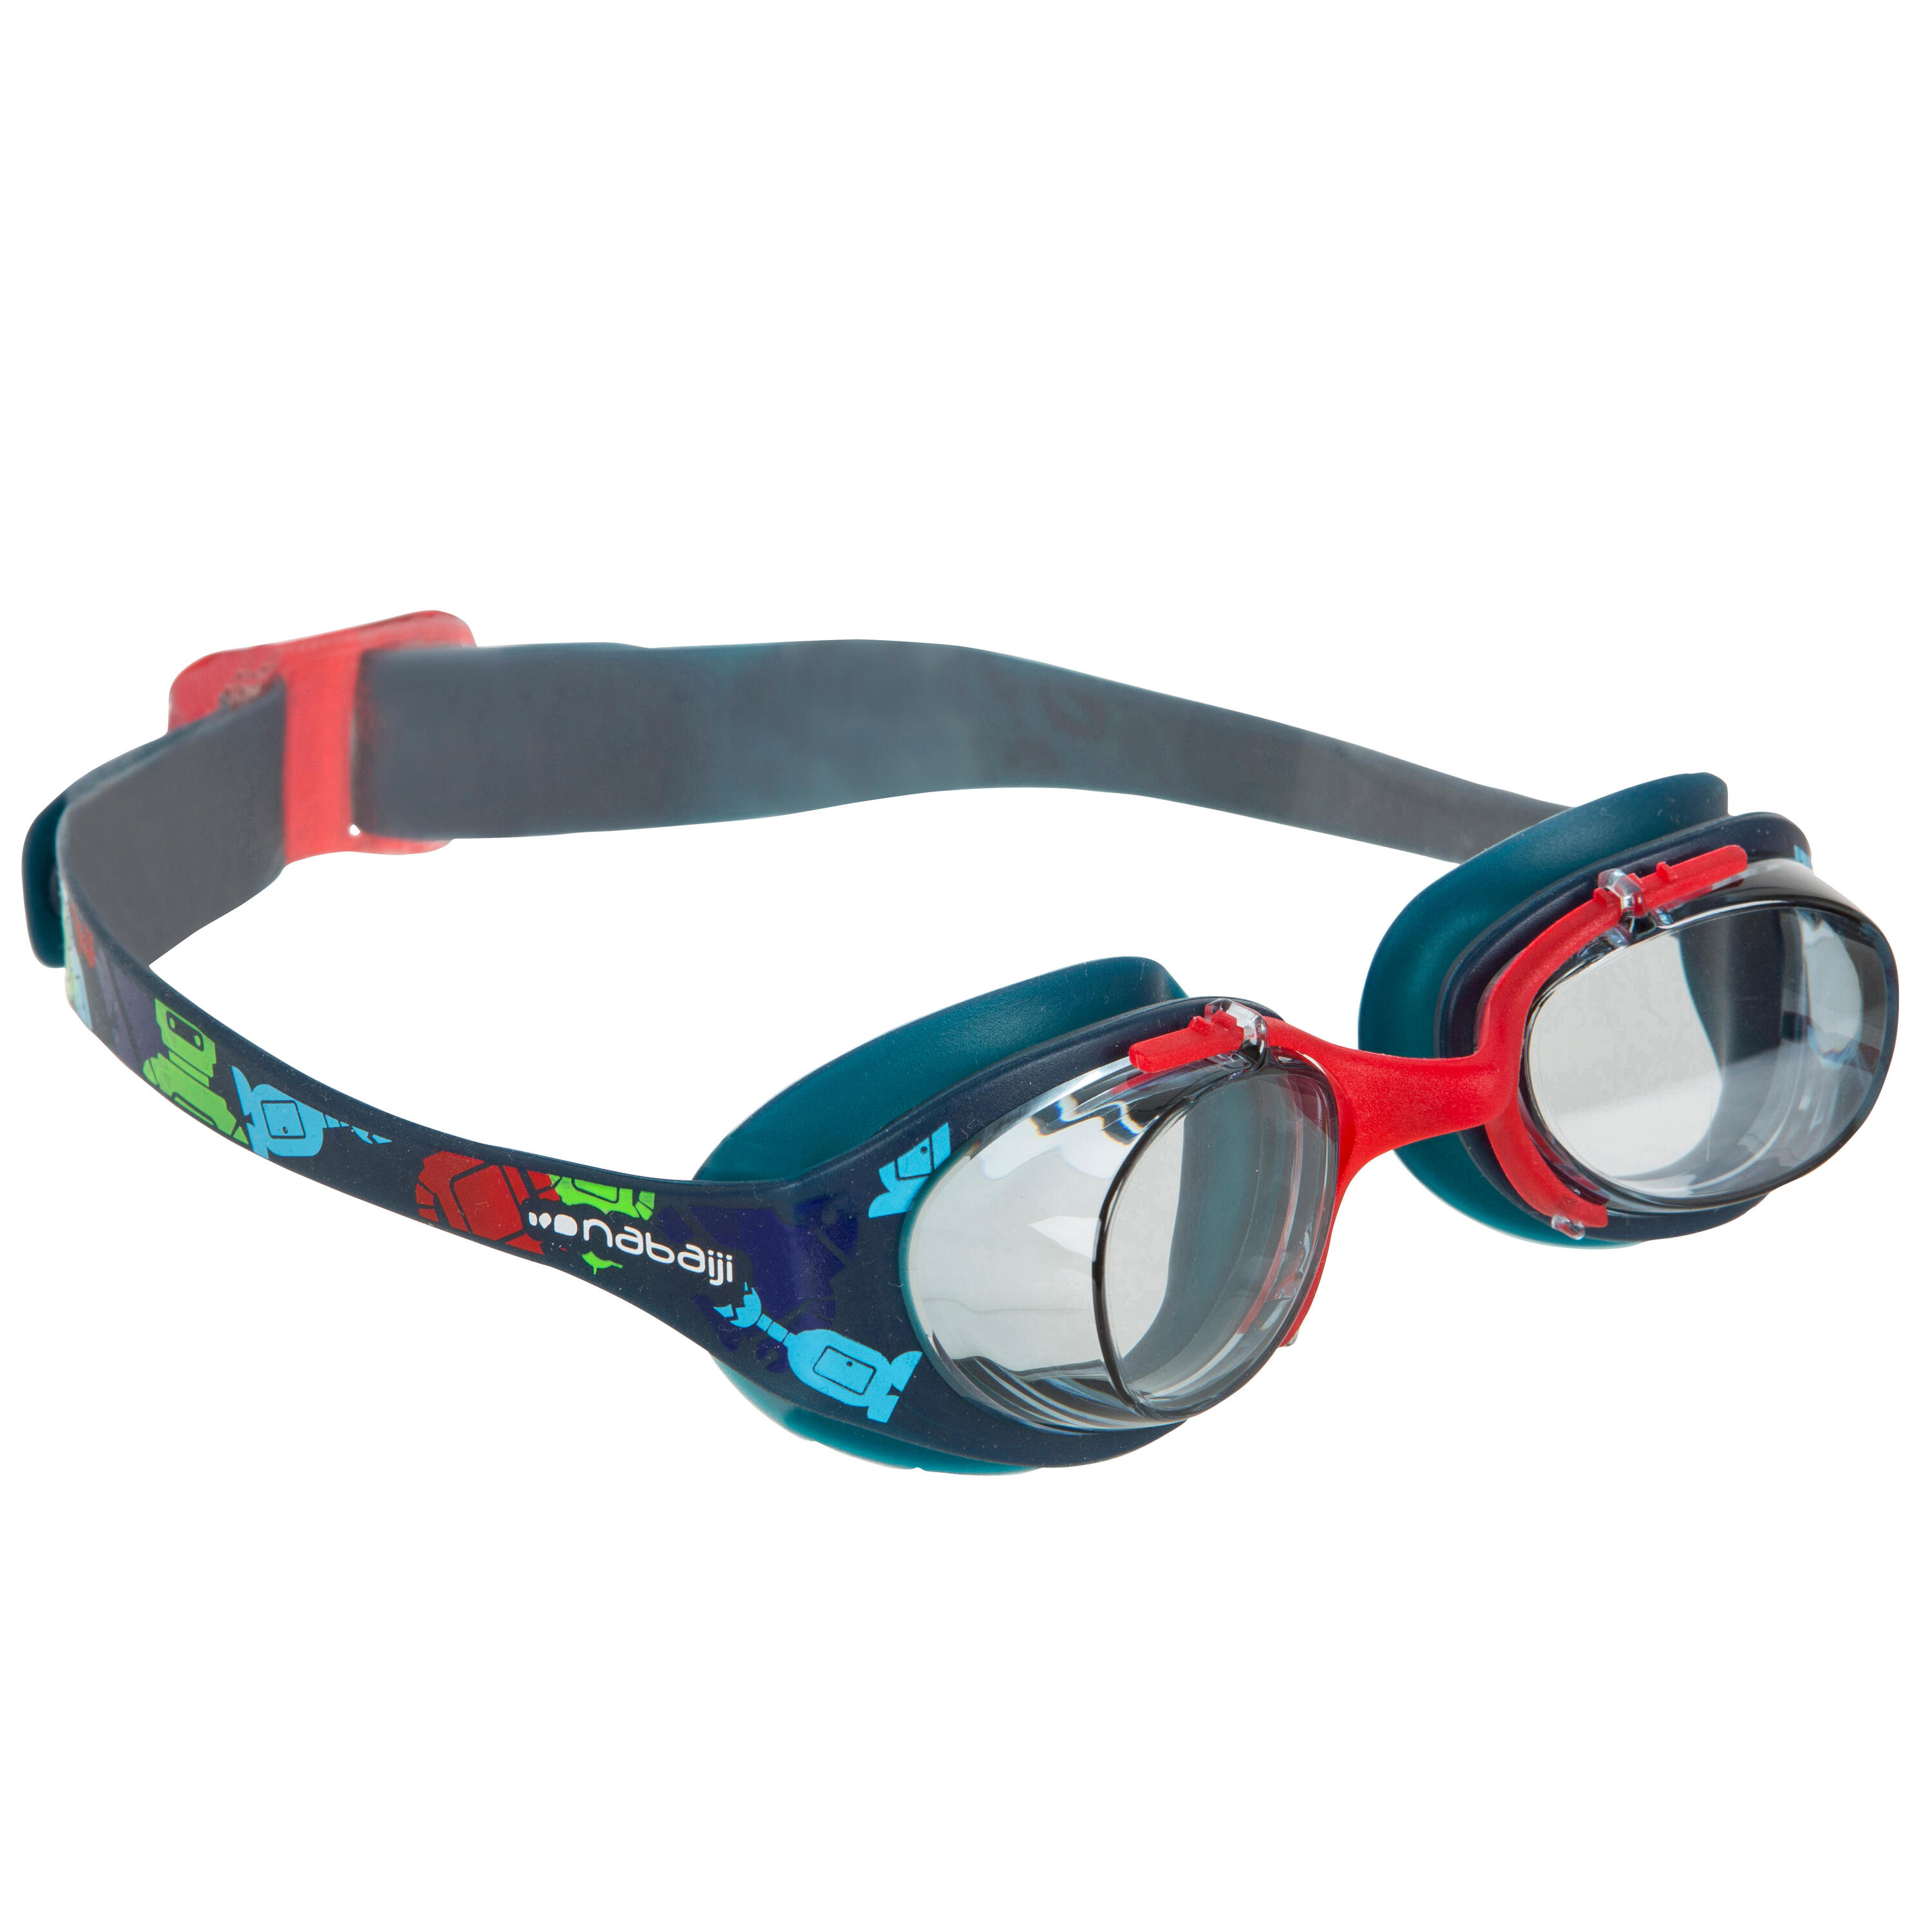 NABAIJI XBASE NONO junior swimming goggles - Black